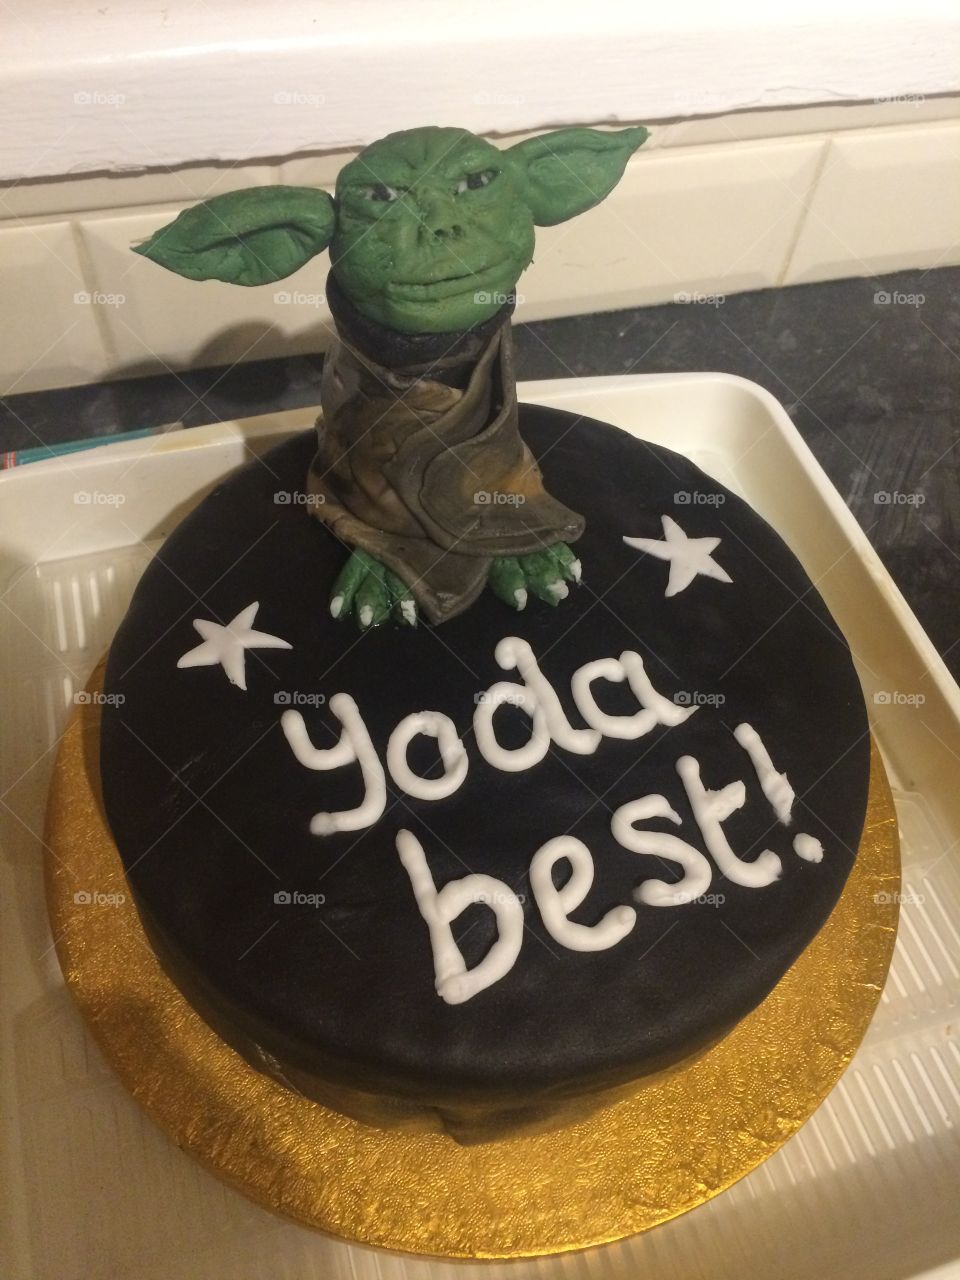 Homemade Yoda best birthday cake Yoda icing model